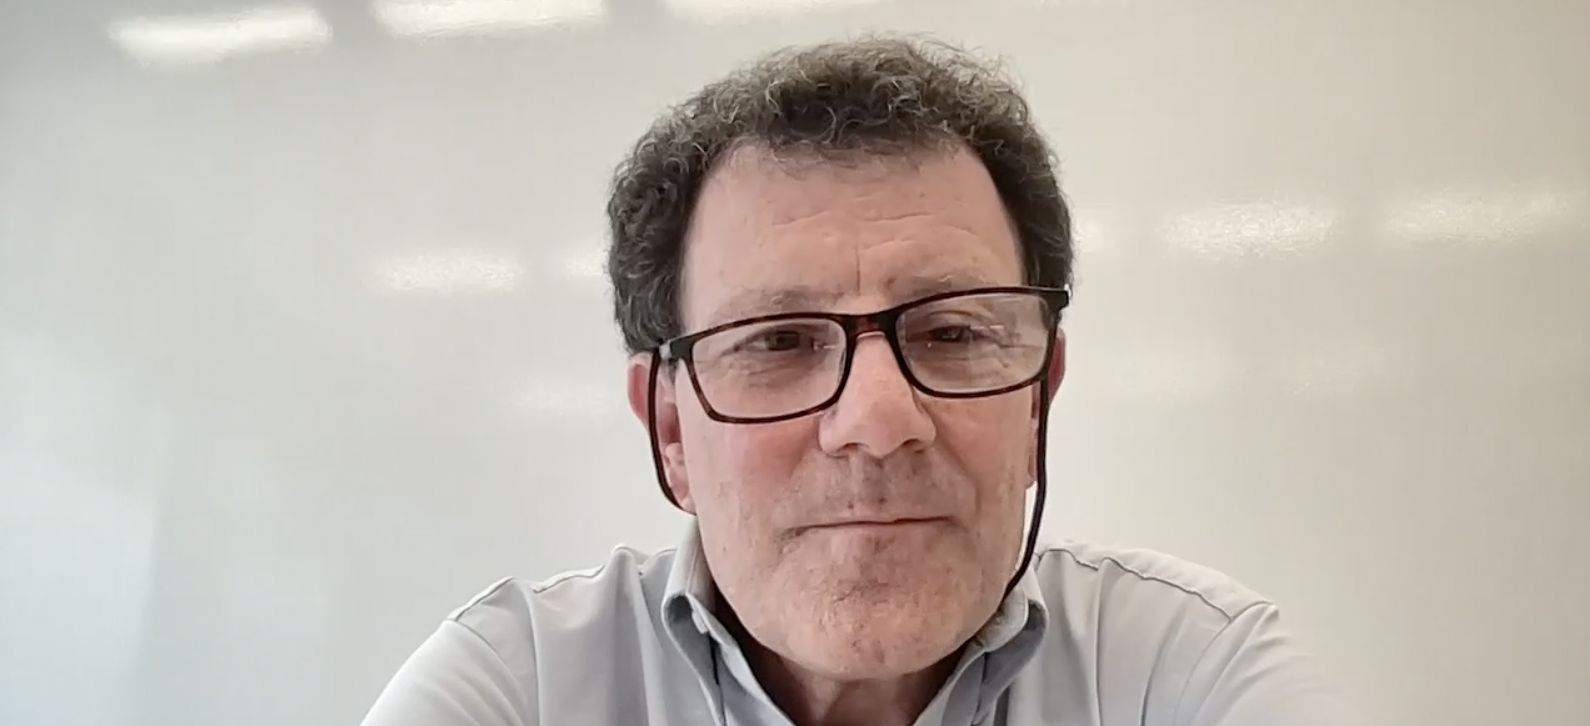 Journalist Nicholas Kristof talks compassion and media coverage of